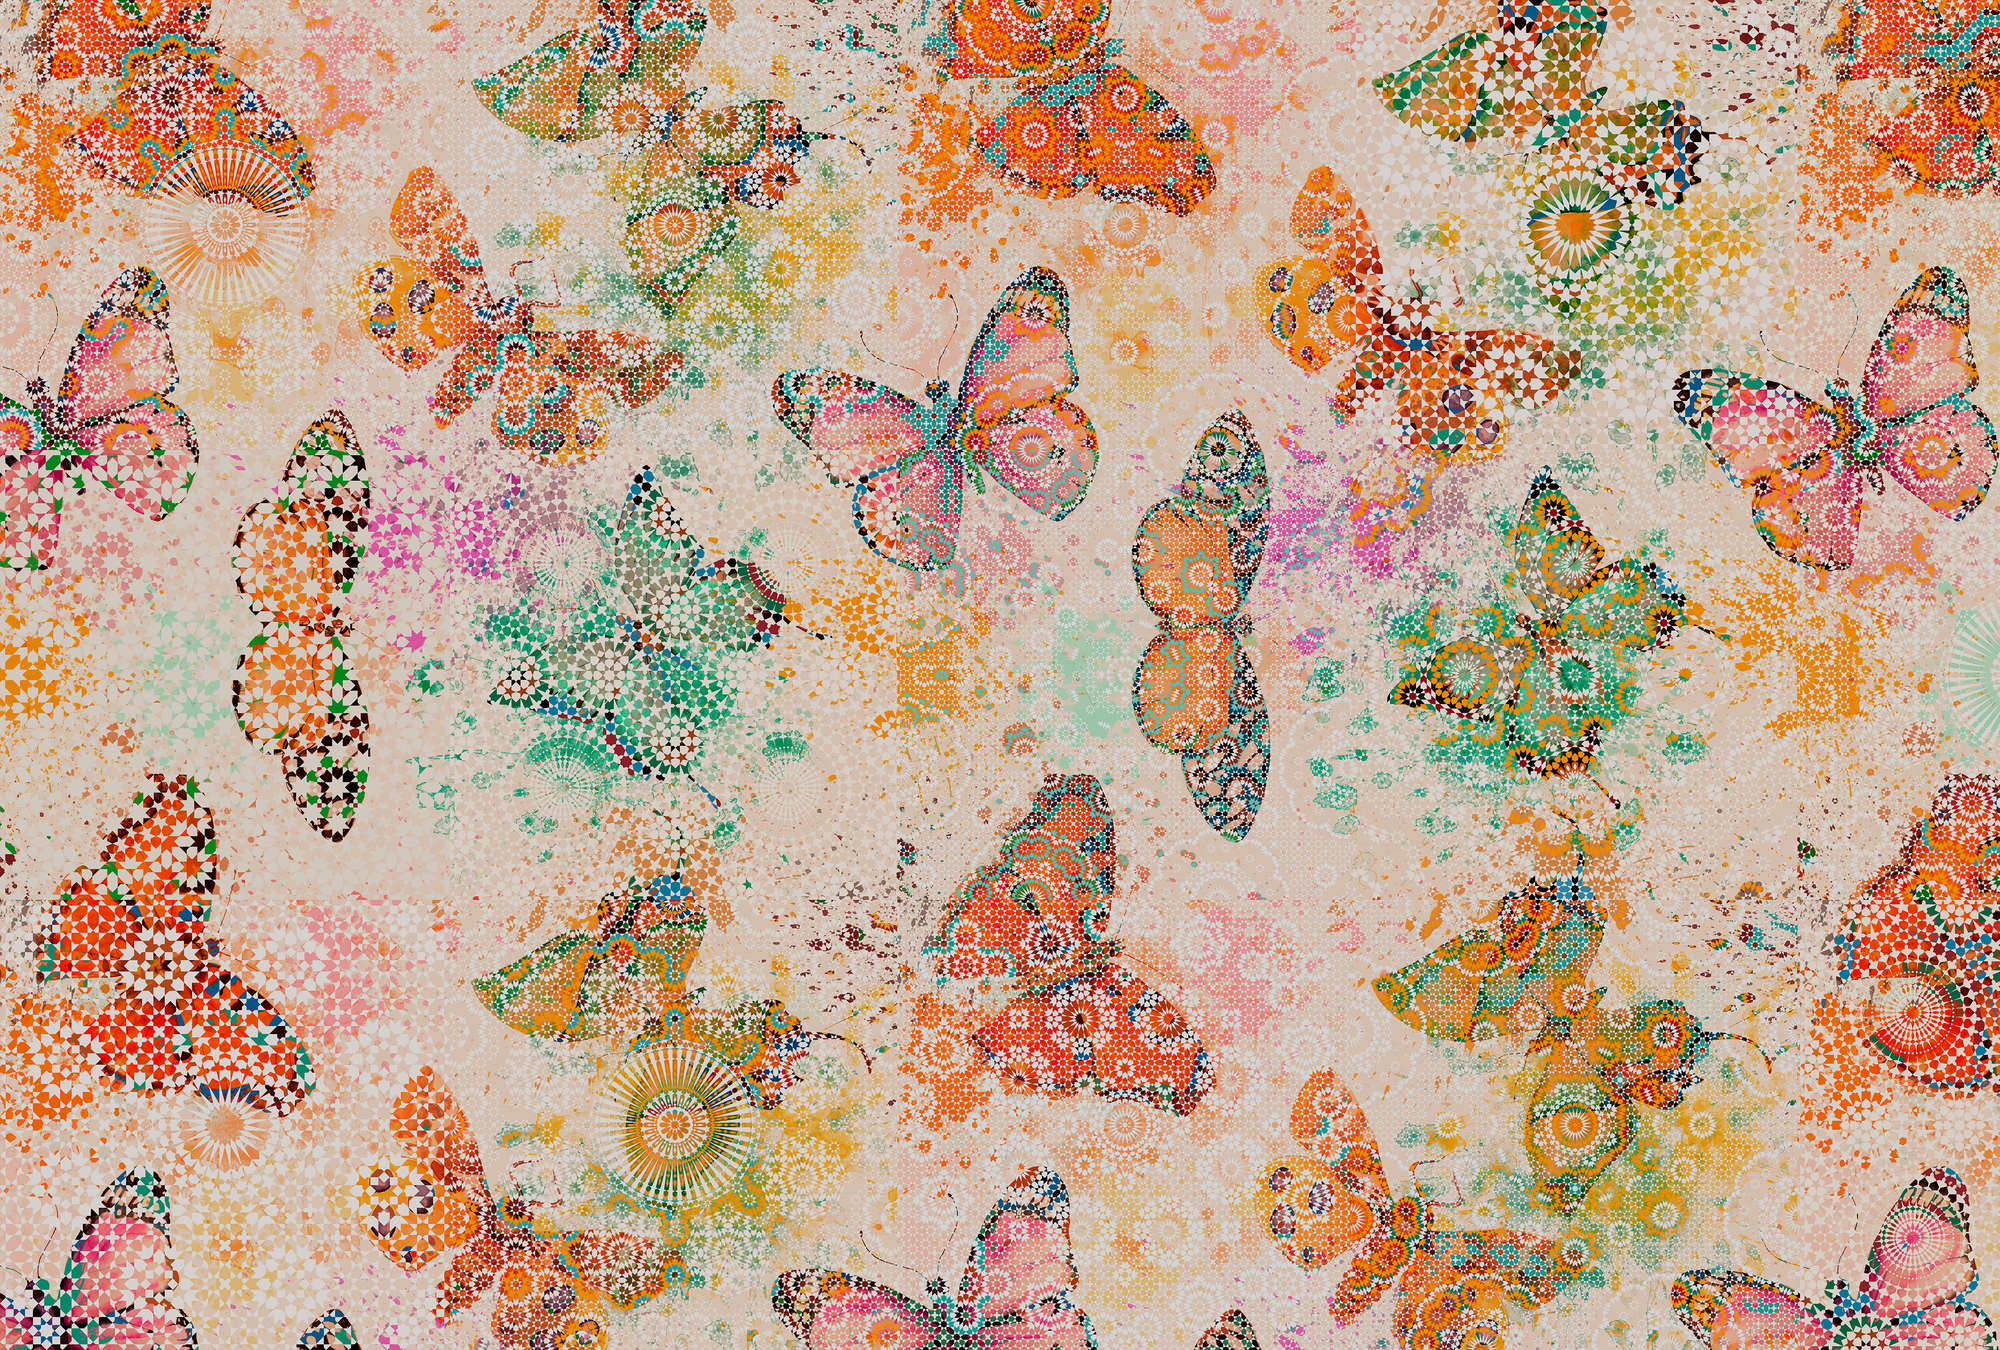             Papier peint papillon style Mosiak - Walls by Patel
        